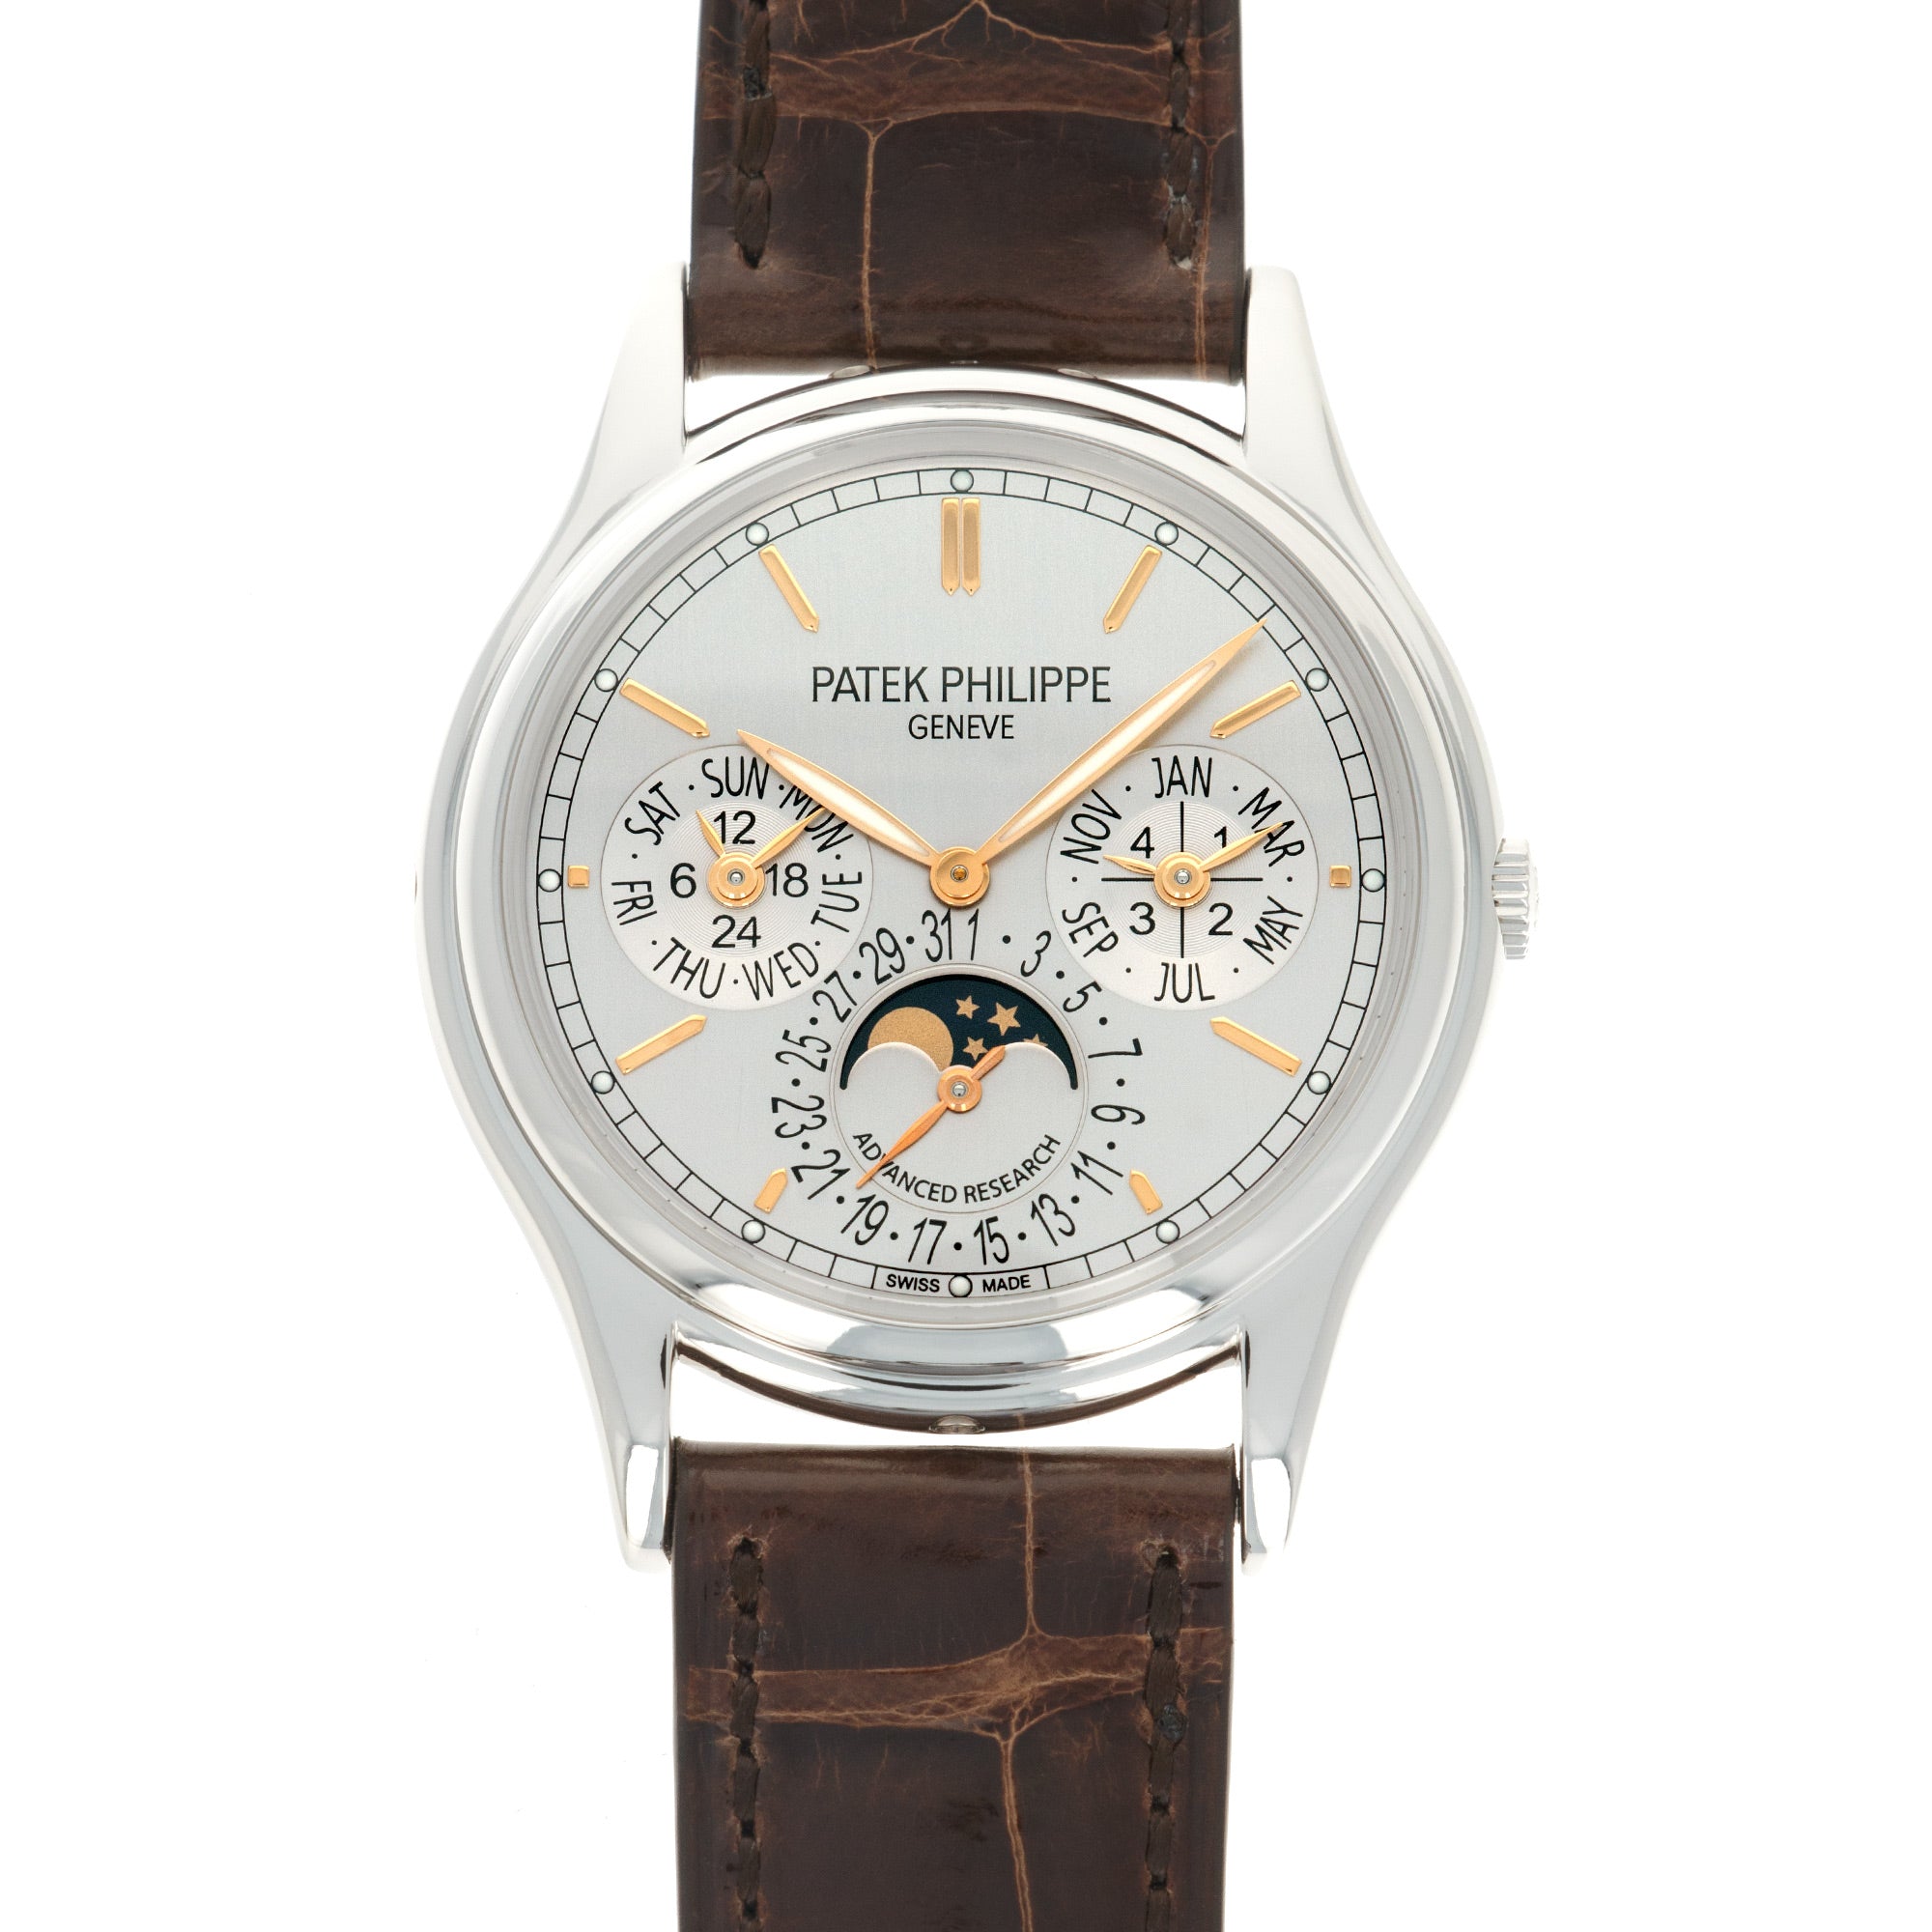 Patek Philippe - Patek Philippe Platinum Perpetual Calendar Advanced Research Watch Ref. 5550 - The Keystone Watches